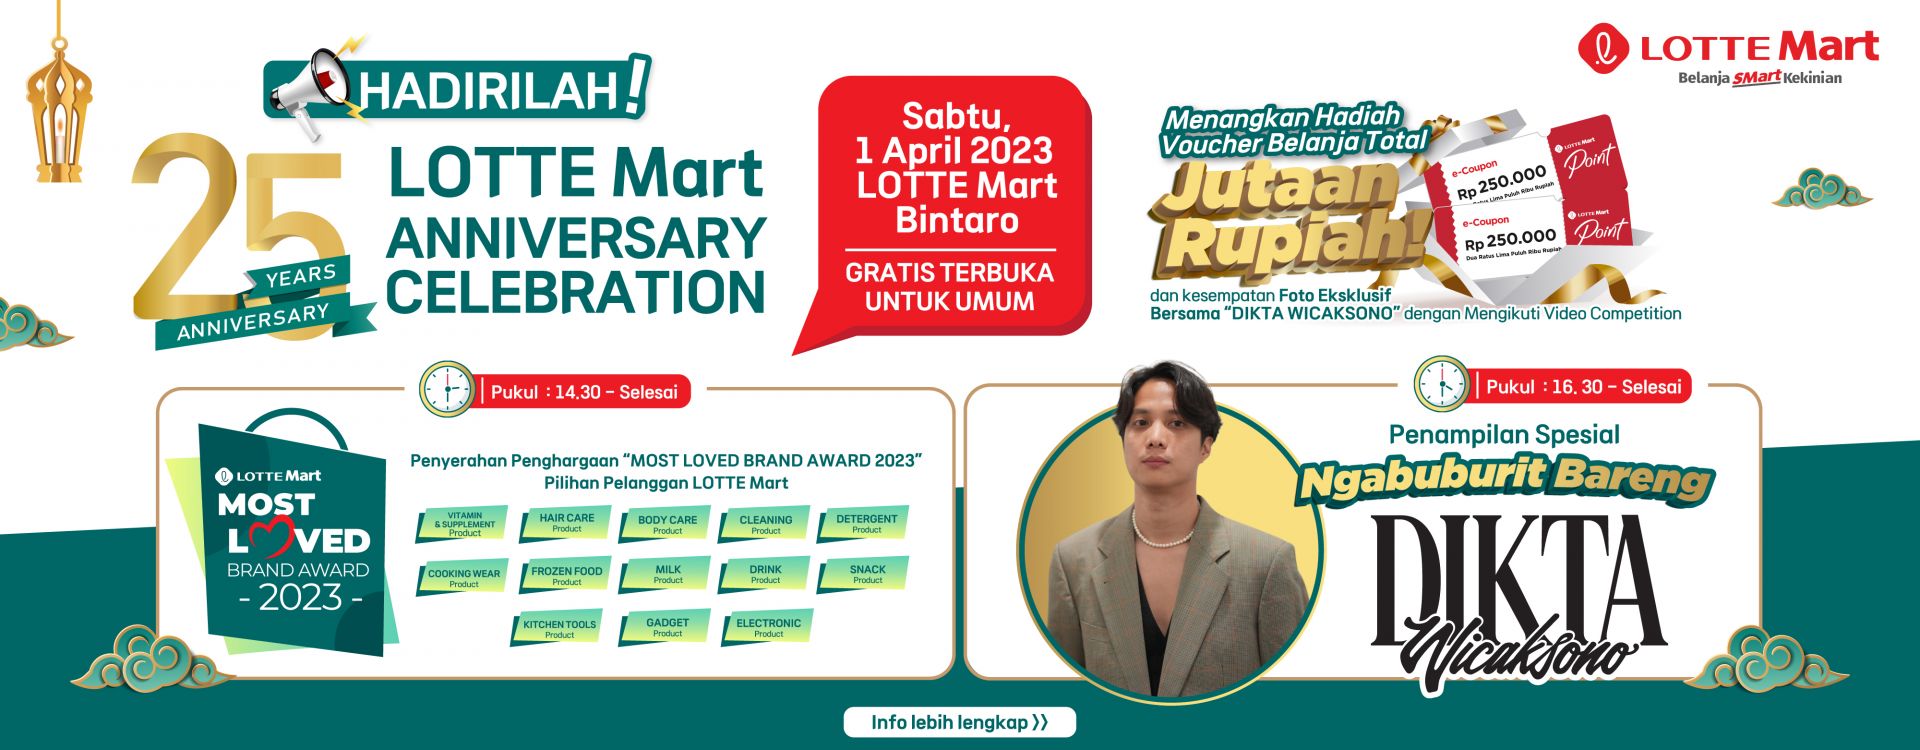 https://lottemart.co.id/25Th Anniversary LOTTE Mart Indonesia - Most Loved Brand Award & Ngabuburit bareng Dikta Wicaksono